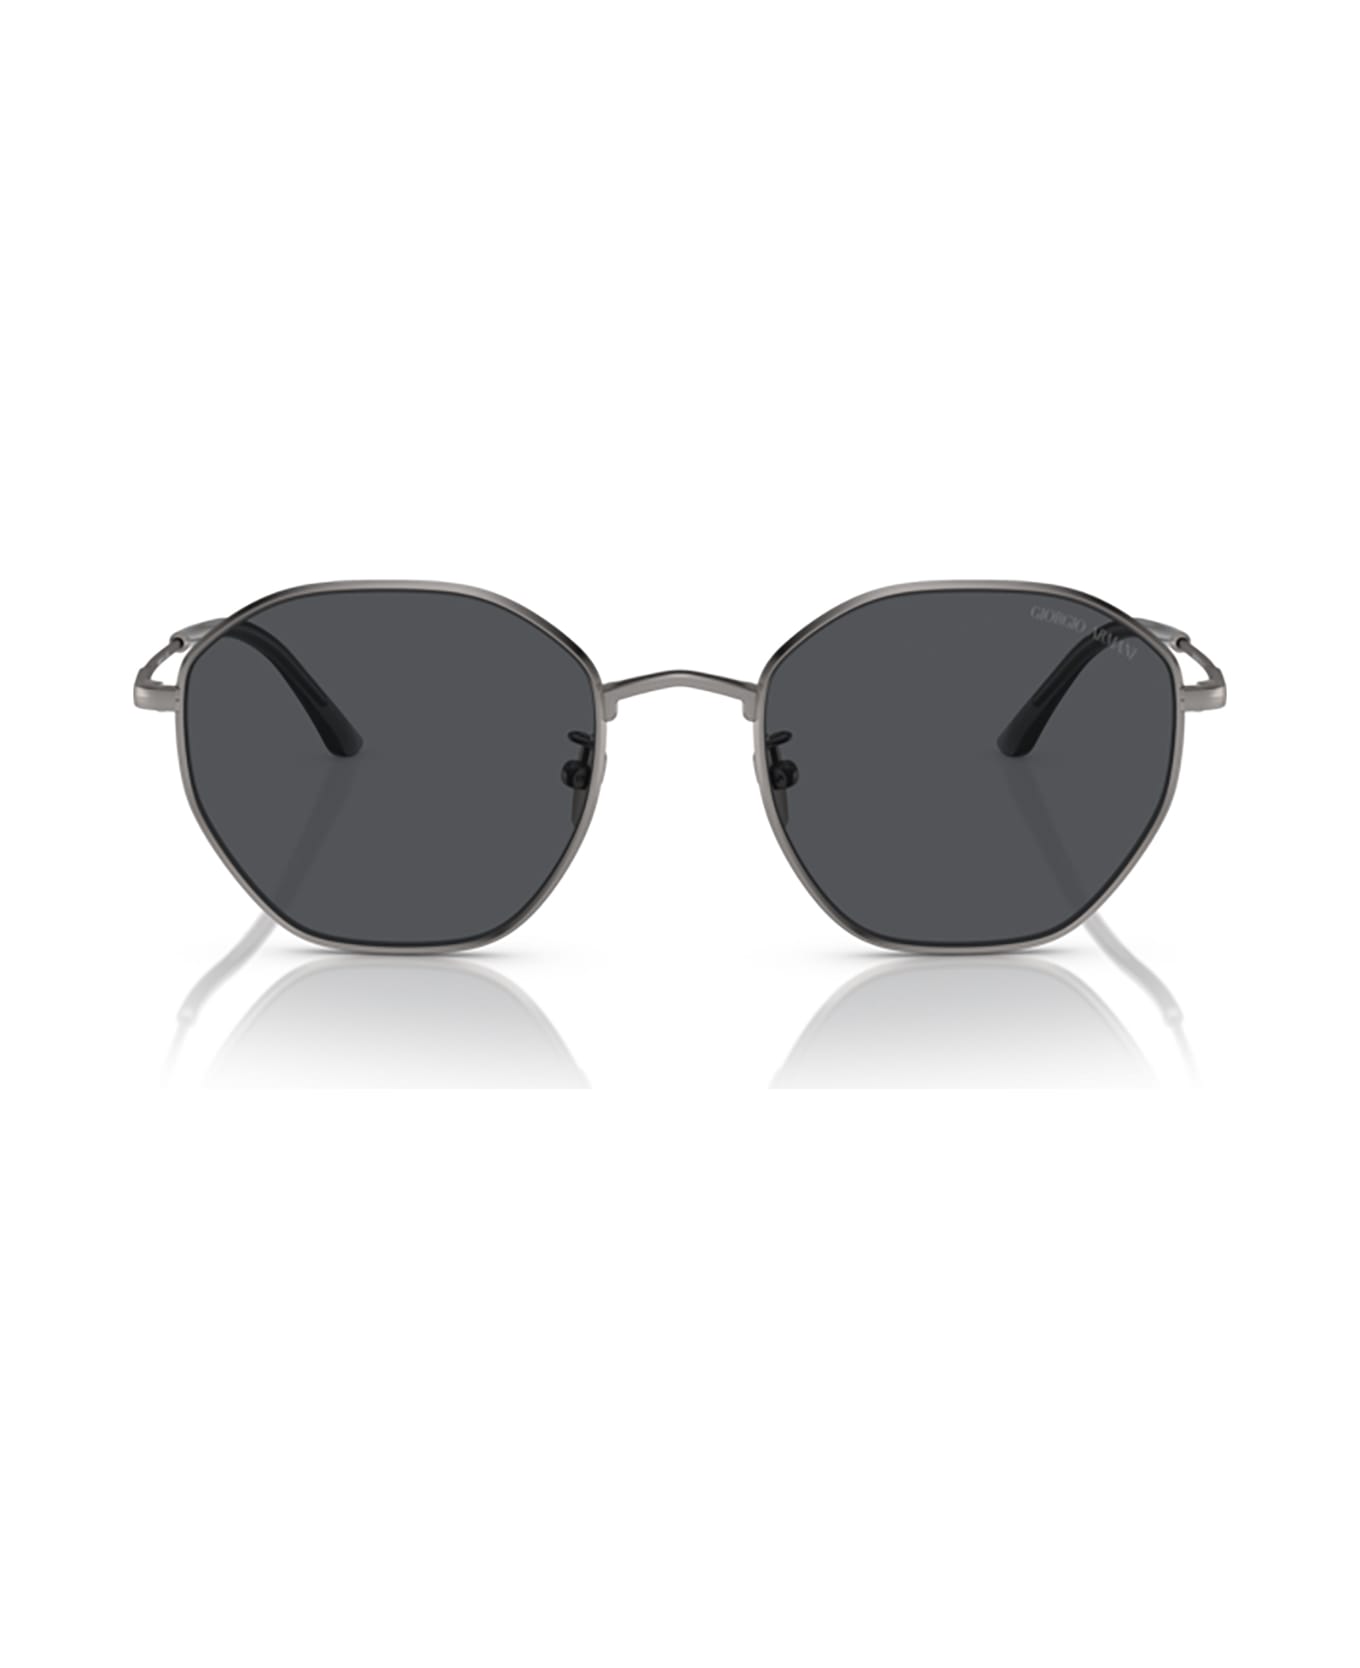 Giorgio Armani Ar6150 Matte Gunmetal Sunglasses - Matte Gunmetal